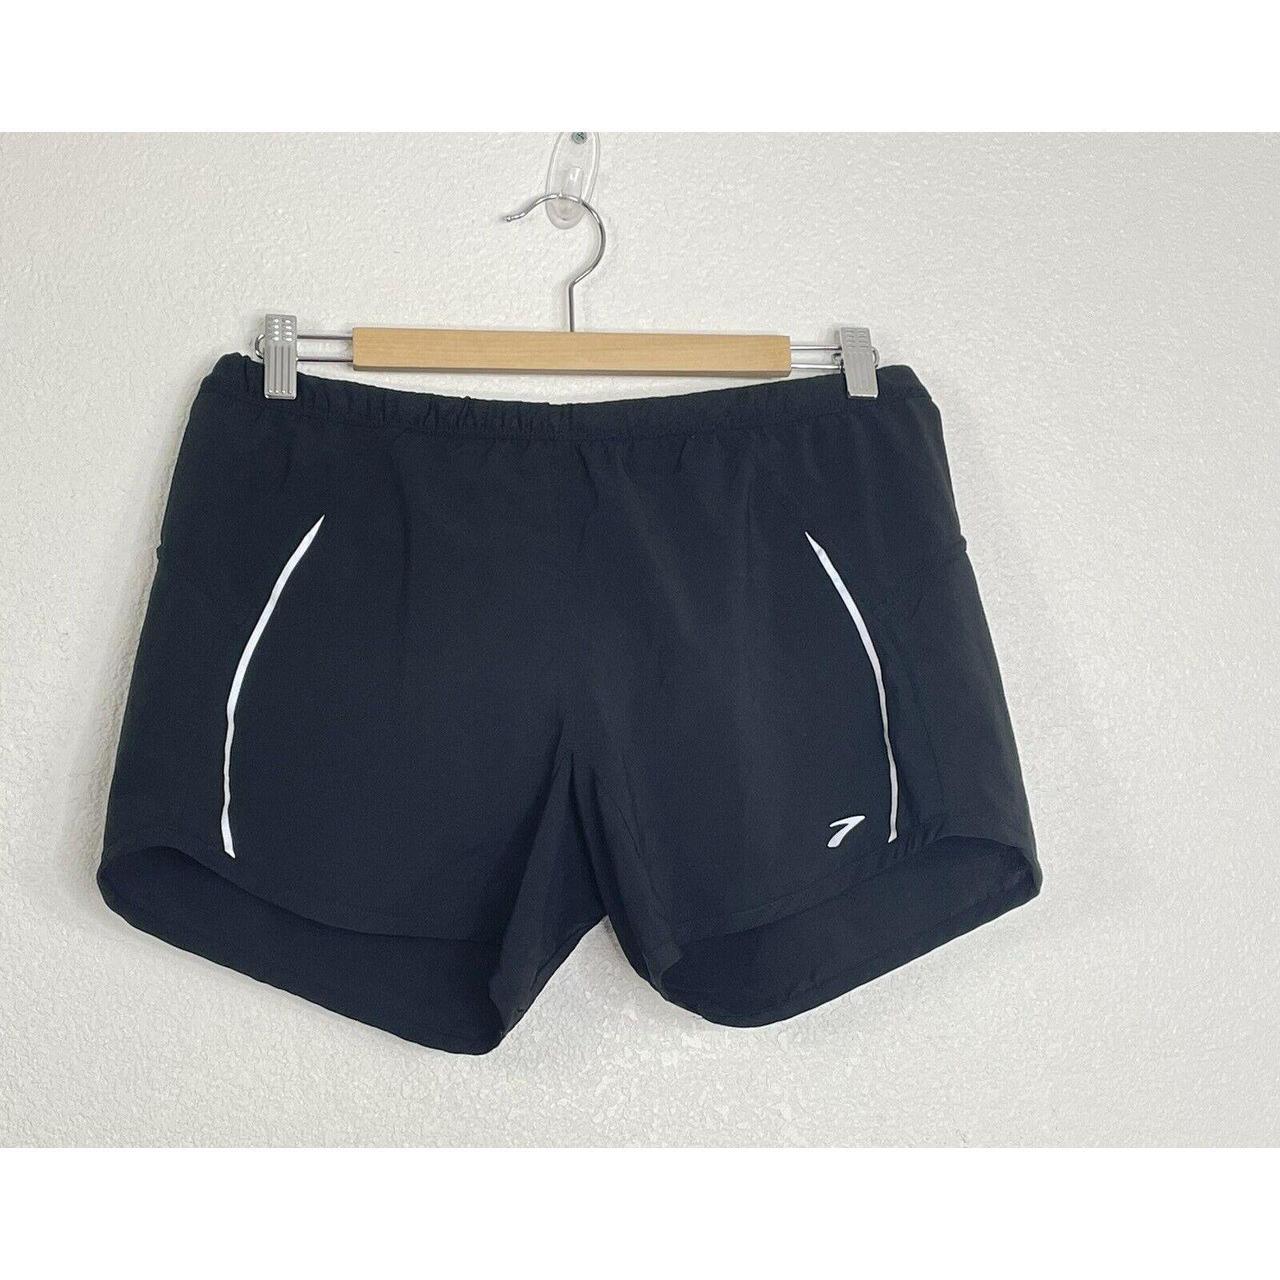 Nike women's sweat shorts. Size M. Black. Drawstring. Elastic